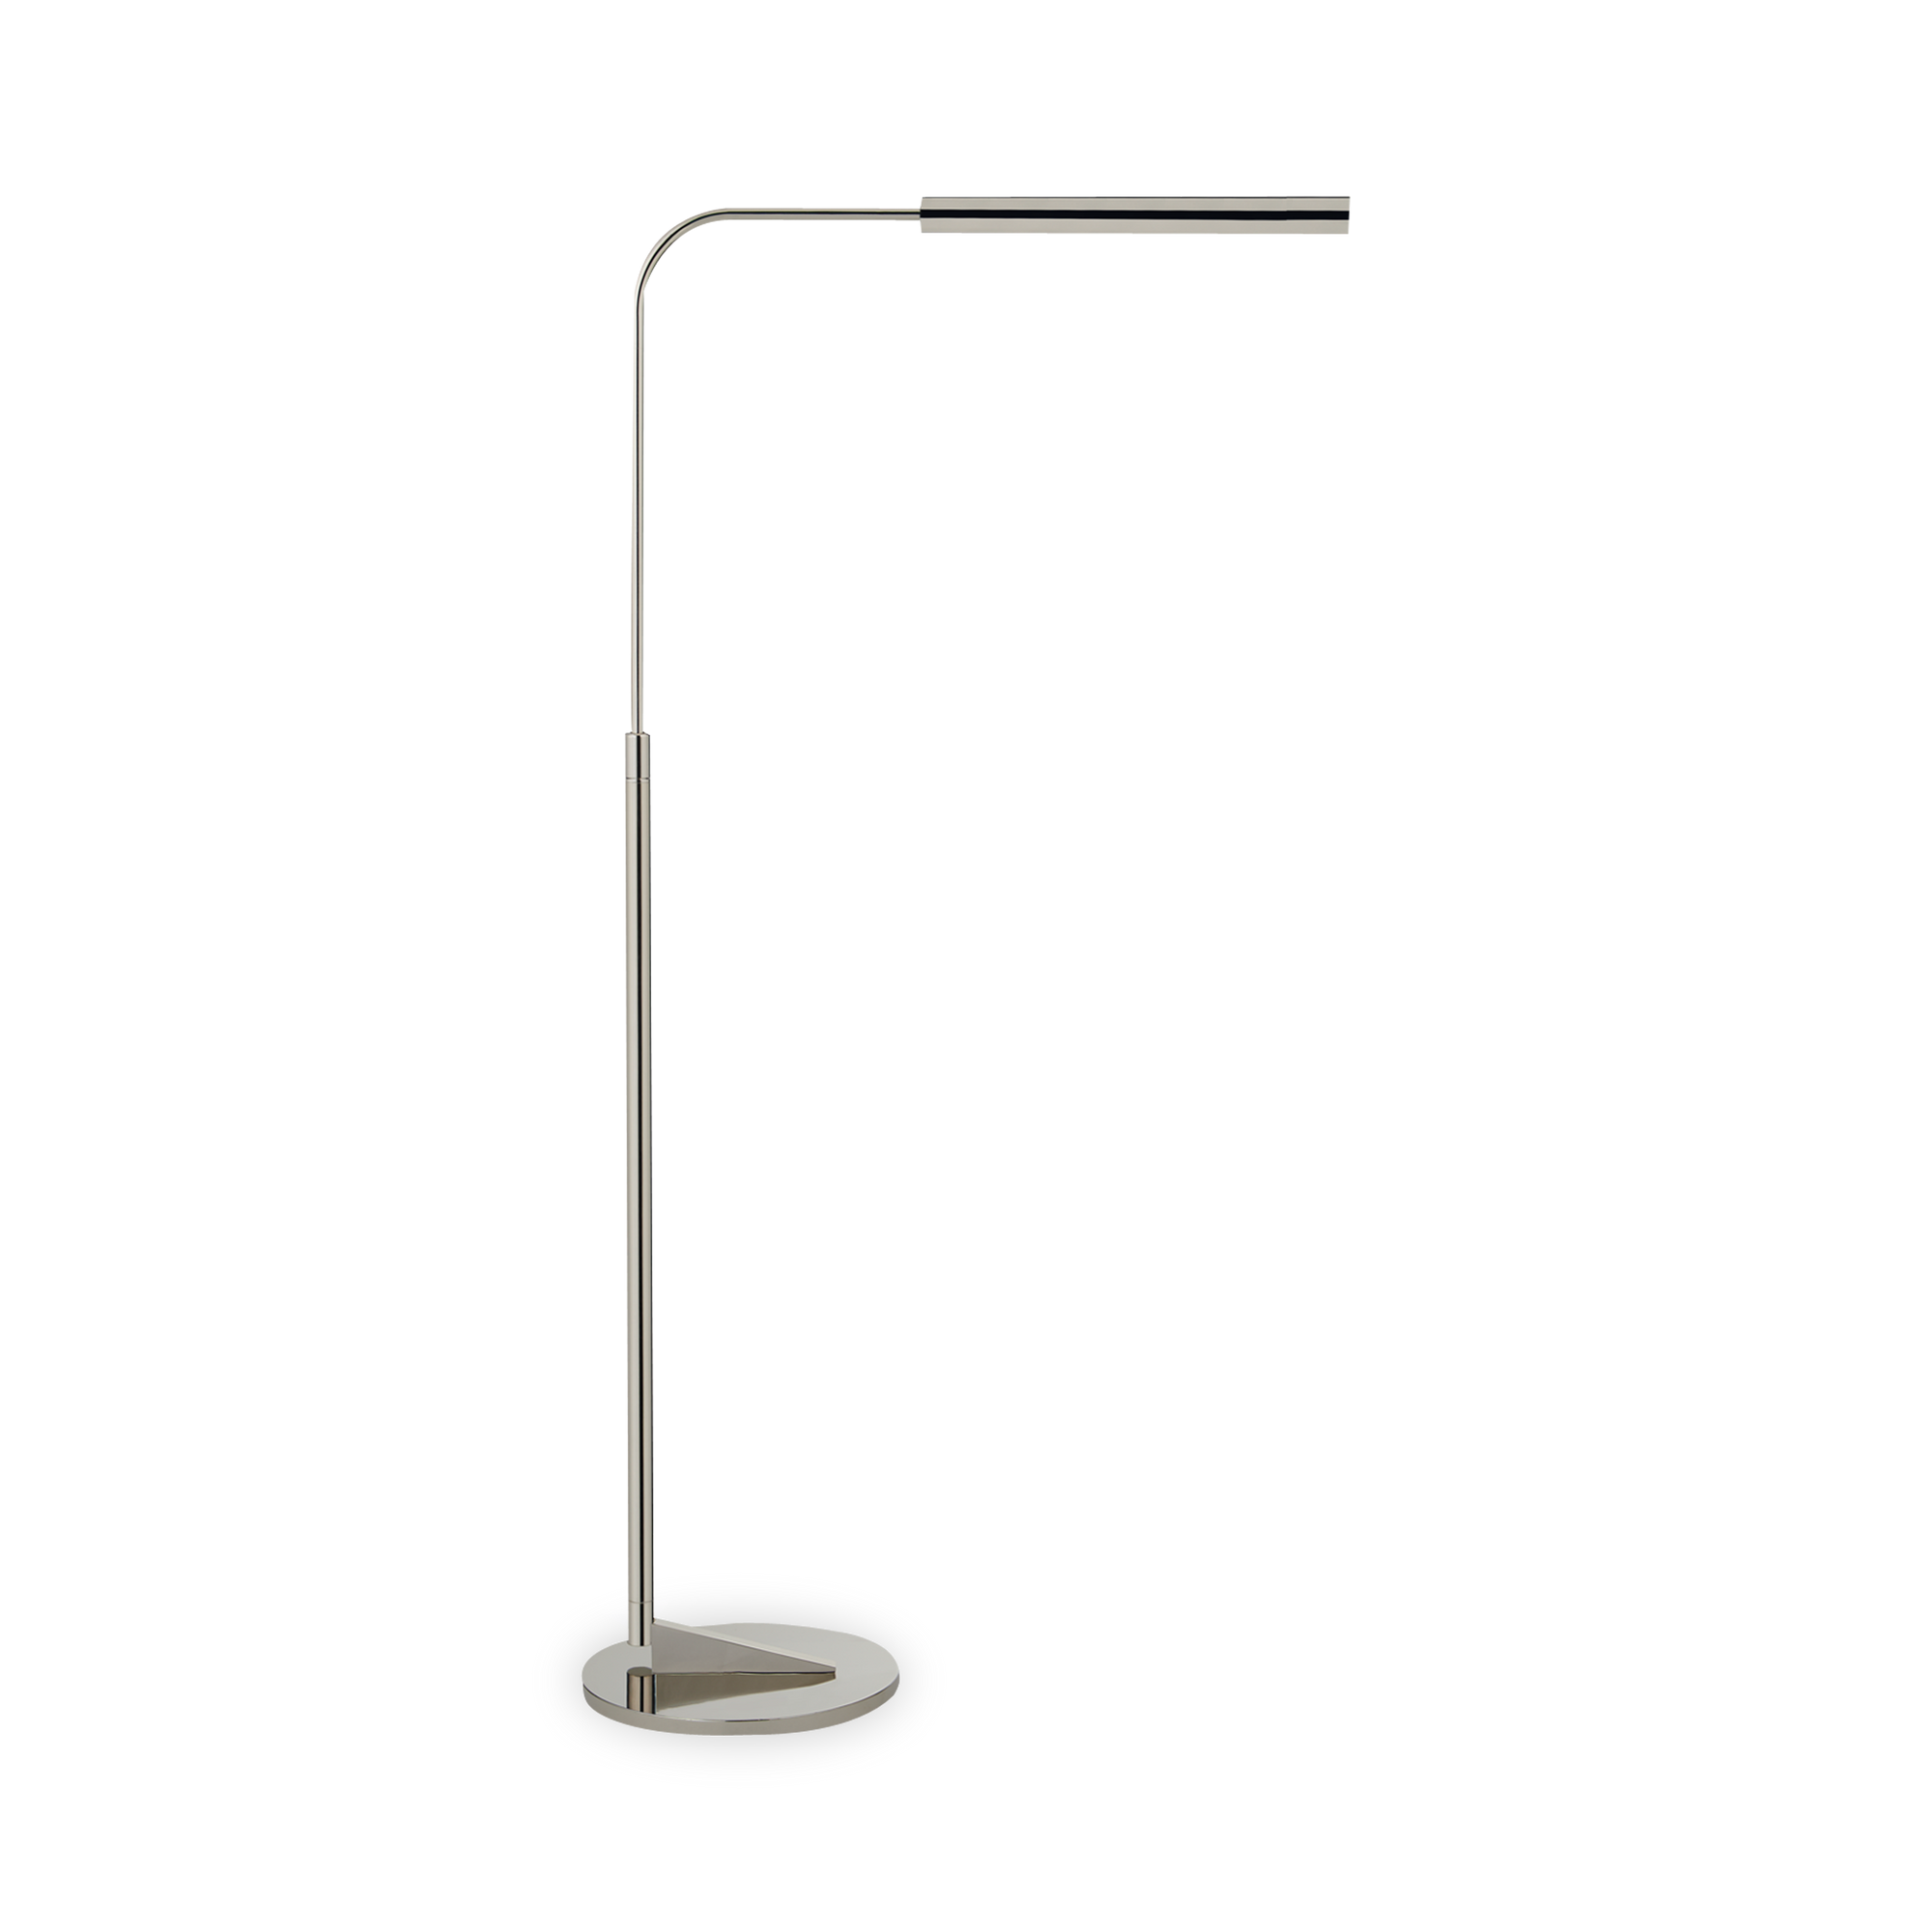 The Austin Adjustable Floor Lamp bridges elegance and function, with a modern edge.